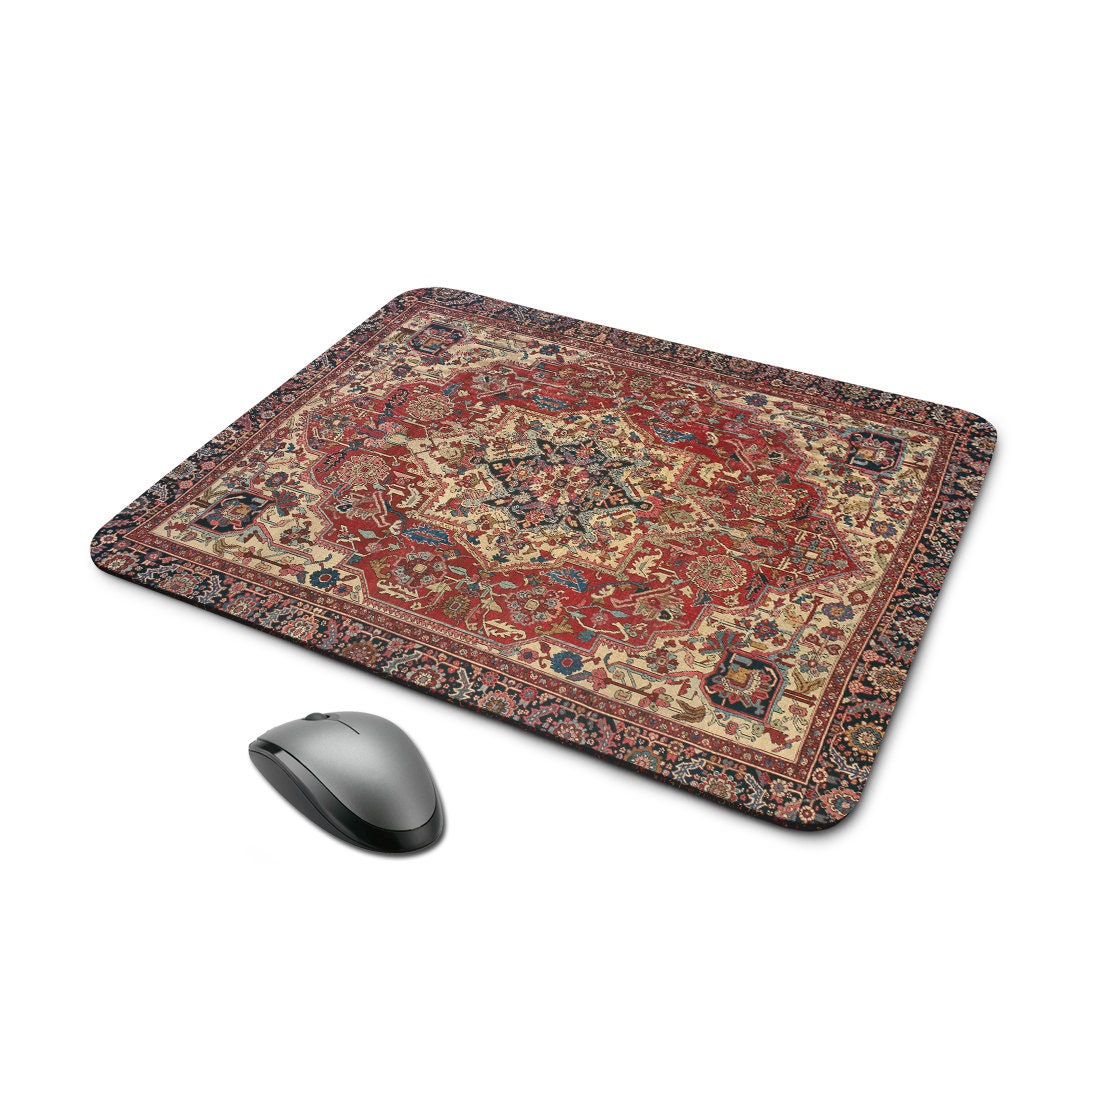 Large Russian Carpet Mousepad Table Pad